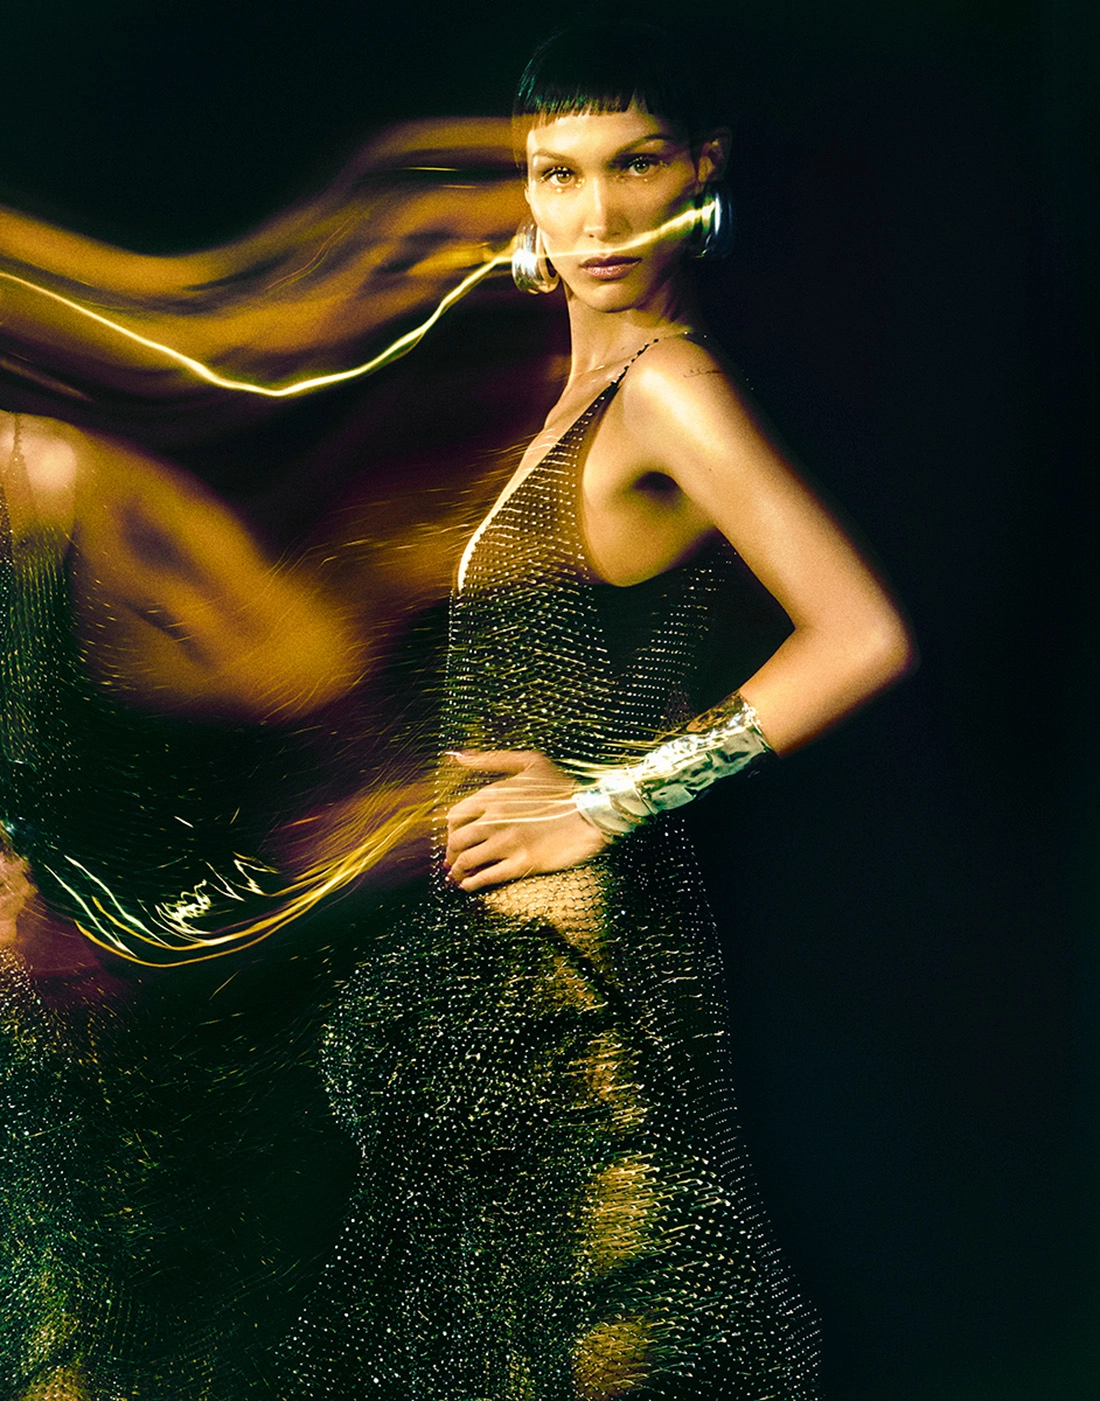 Bella Hadid covers Vogue Spain August 2022 by Elizaveta Porodina